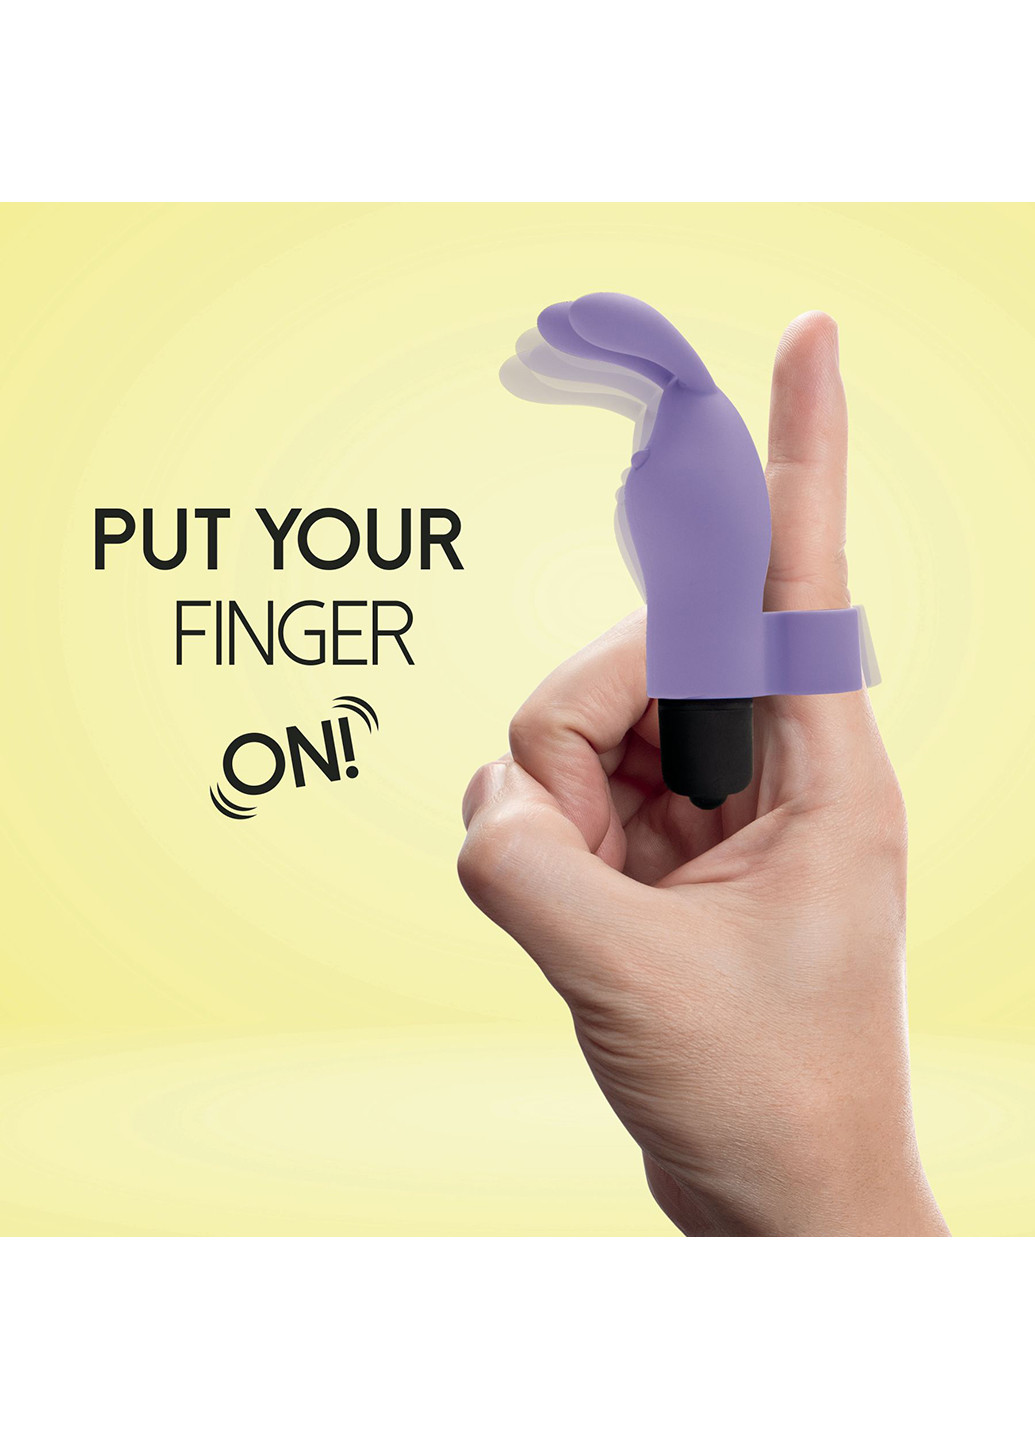 Вібратор на палець Magic Finger Vibrator Purple FeelzToys (254150971)